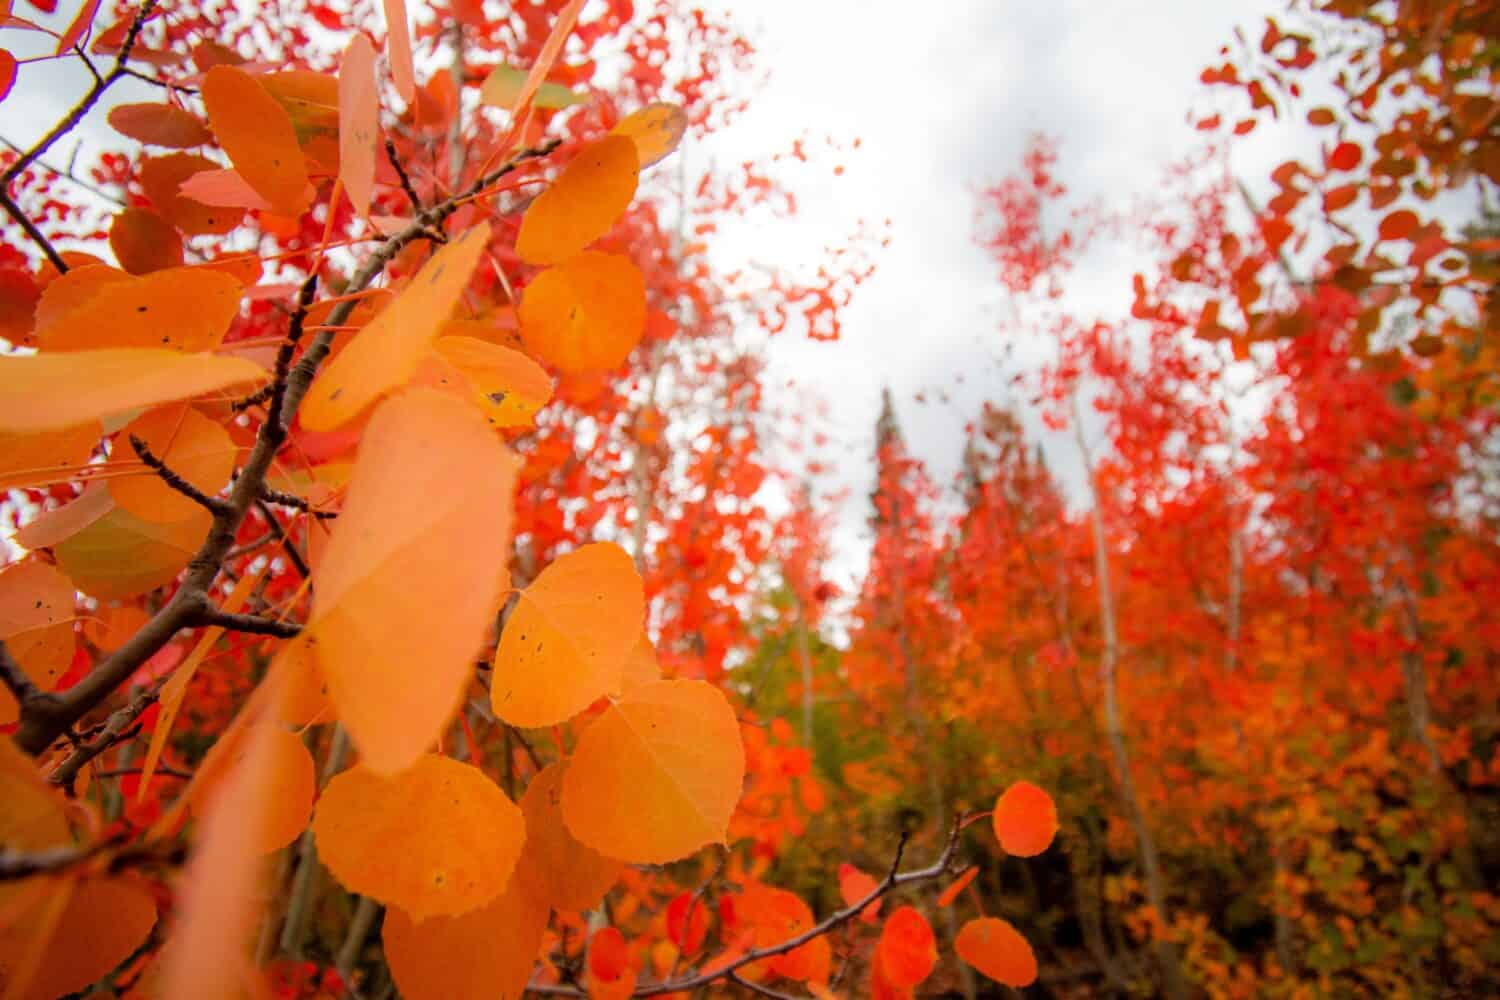 Vibrant Autumn colors in Idaho south of Burley, Idaho near Pomerelle Mountain